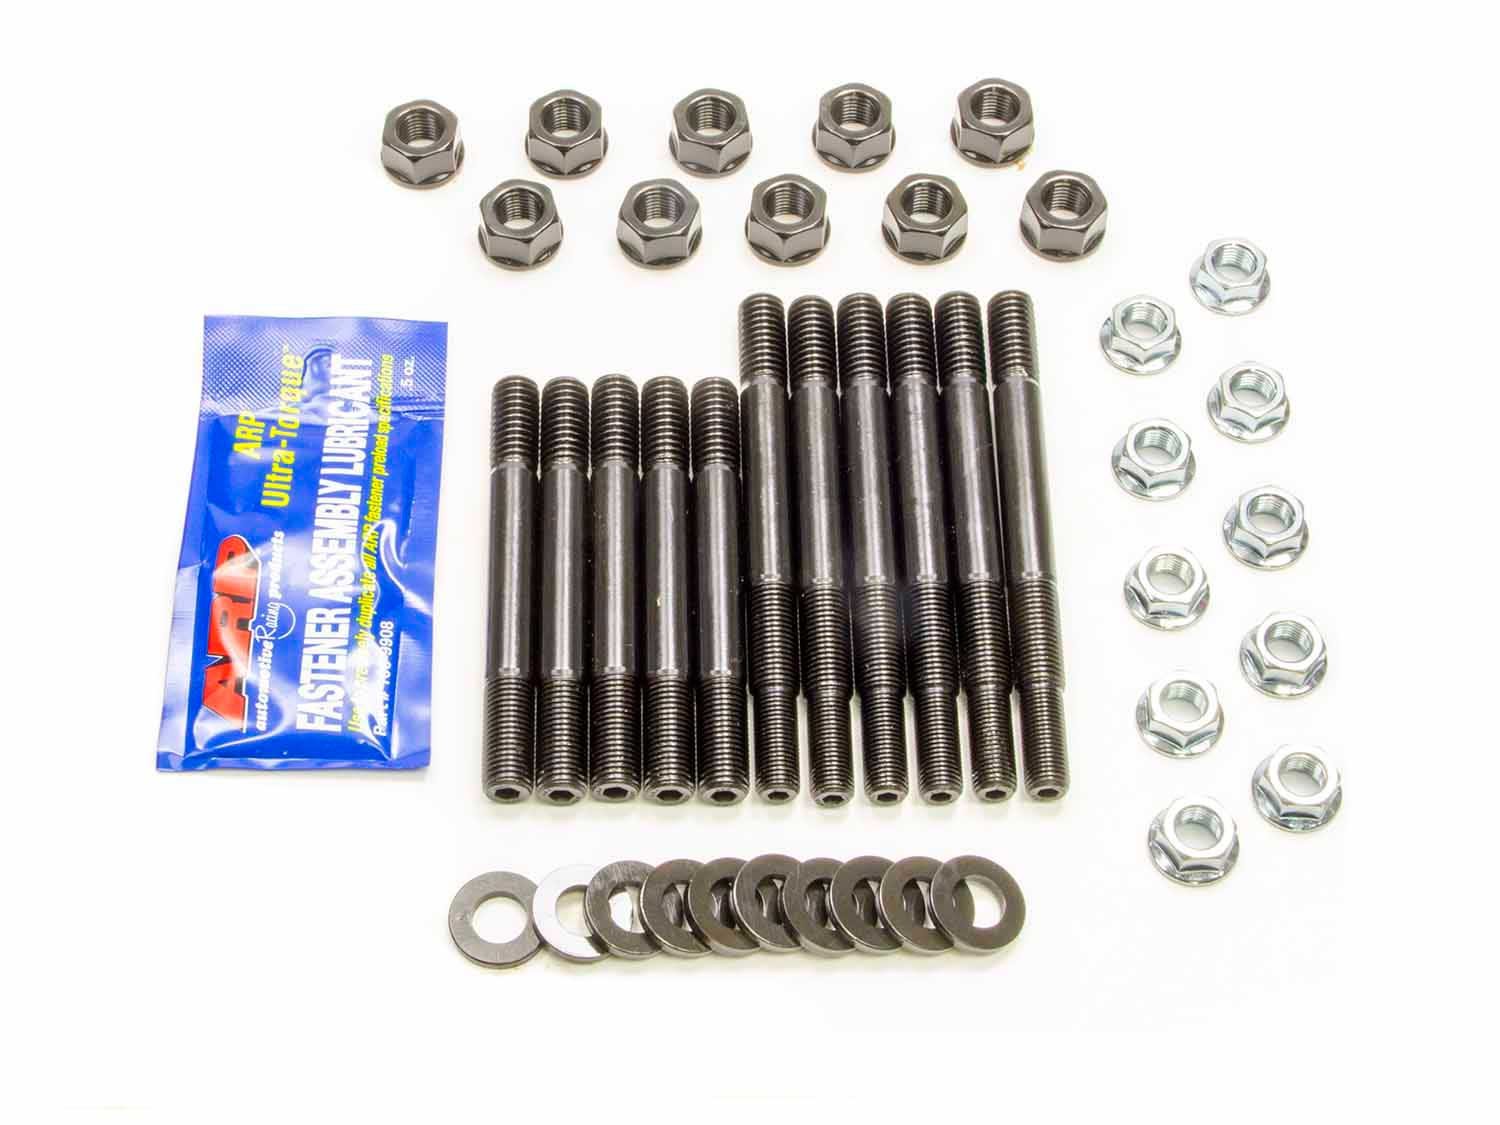 ARP 254-5501 Main Stud Kit, Hex Nuts, 2-Bolt Mains, Chromoly, Black Oxide, Windage Tray, Small Block Ford, Kit